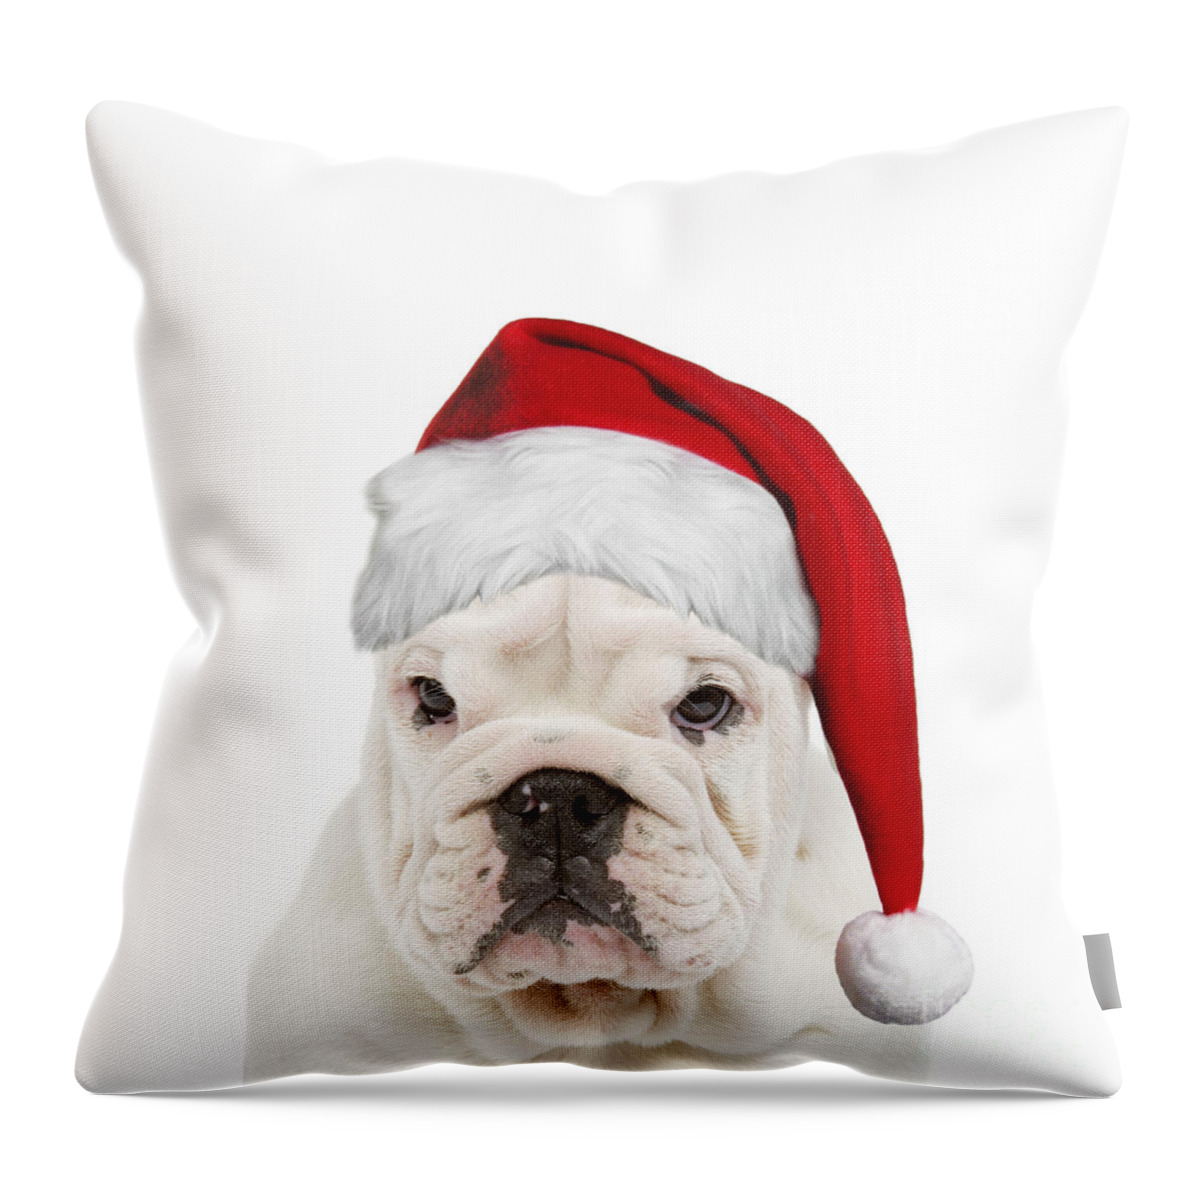 English Bulldog Throw Pillow featuring the photograph English Bulldog In Christmas Hat by Jean-Michel Labat